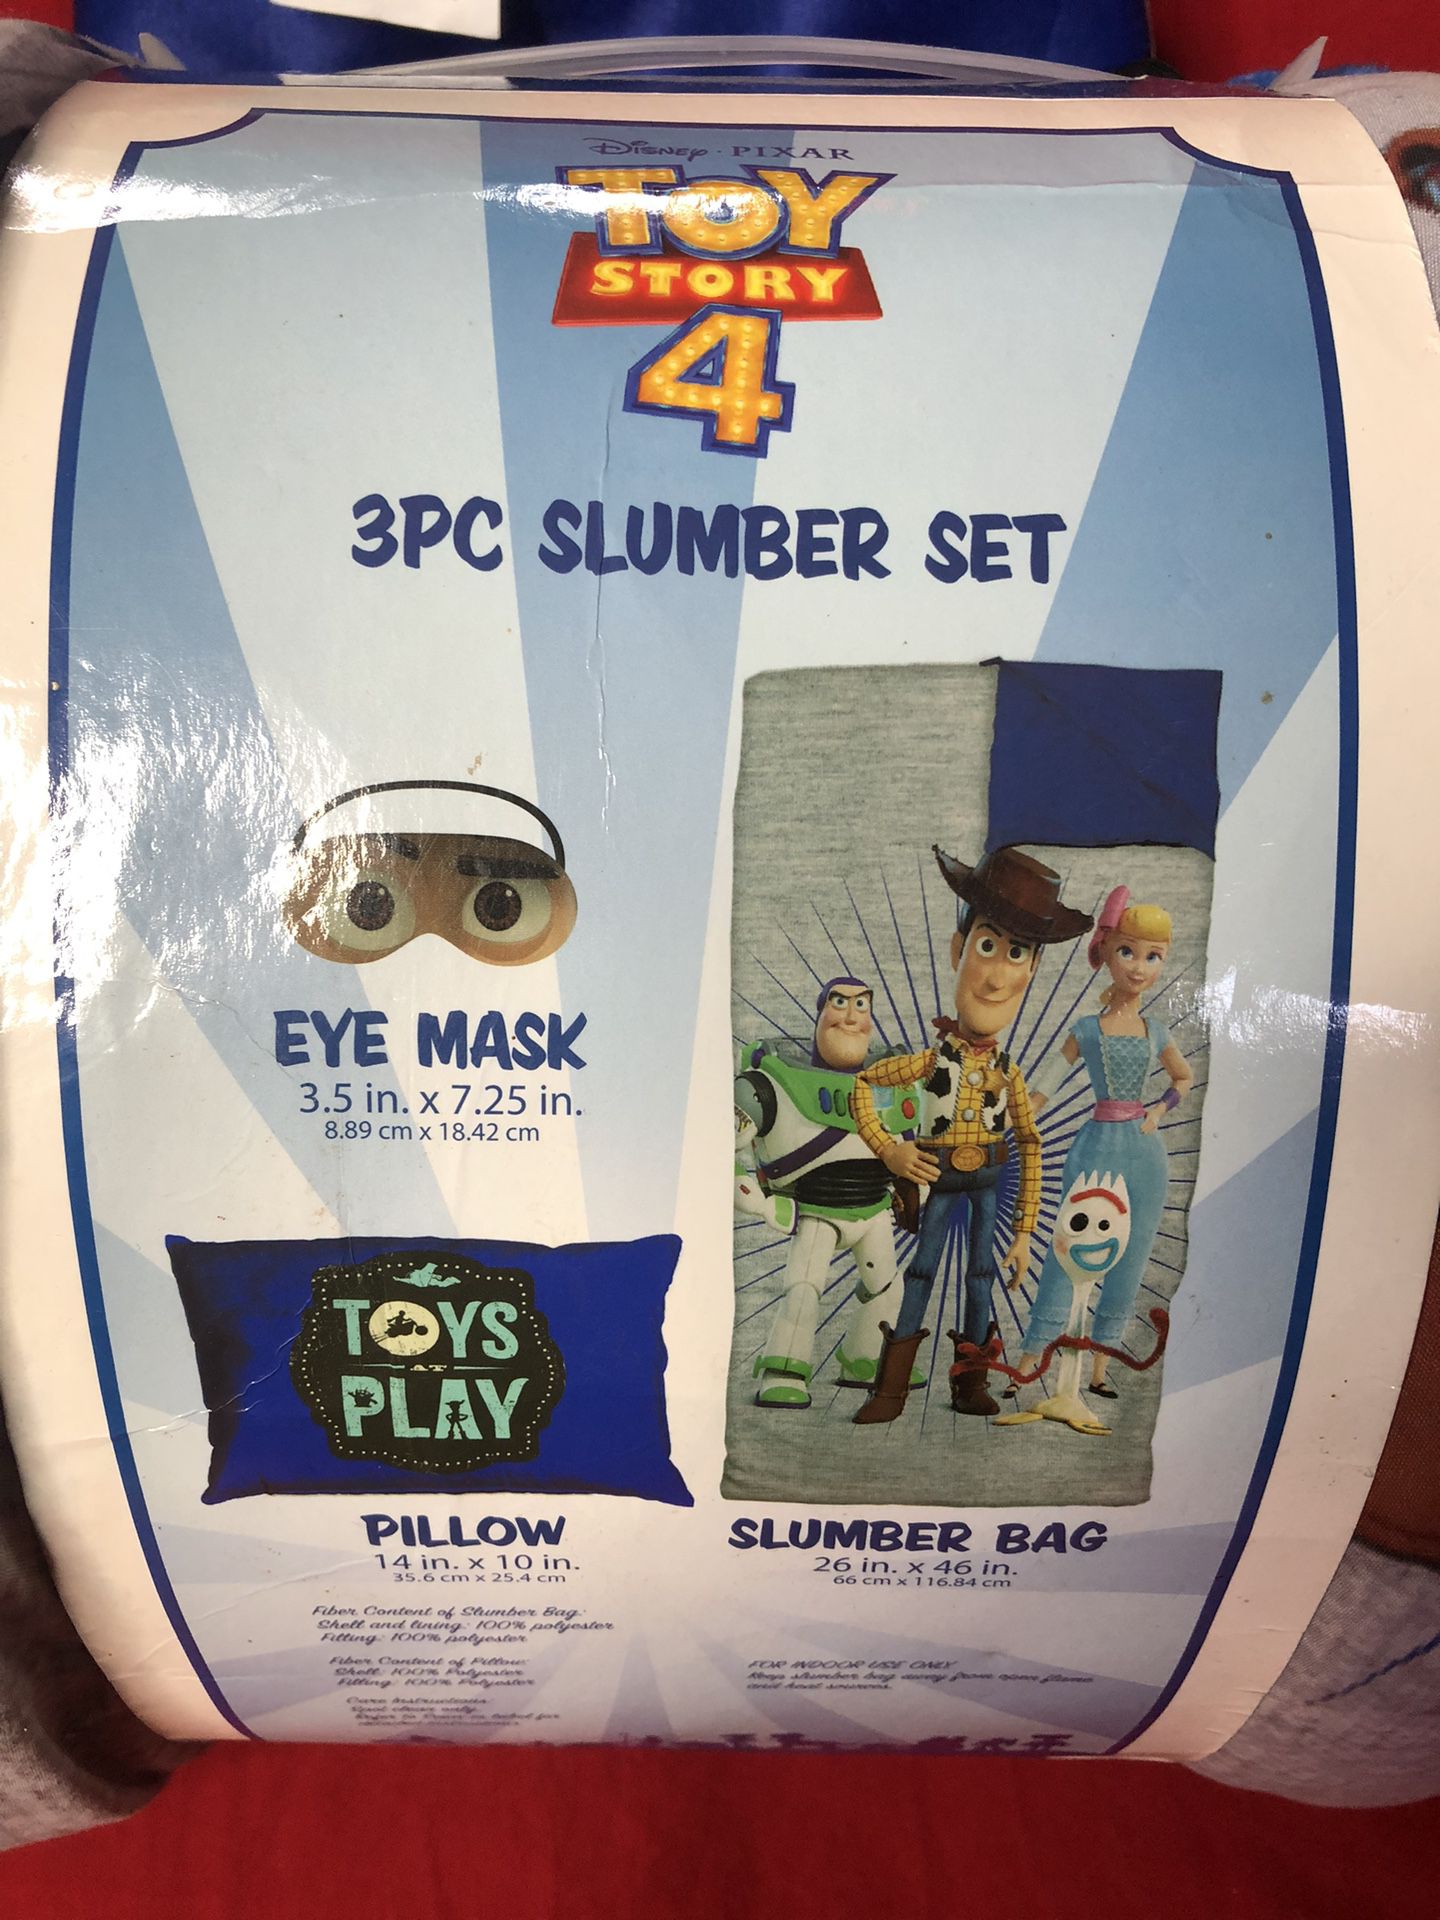 Toy Story 4 TREE PIECE Sleepover Set 